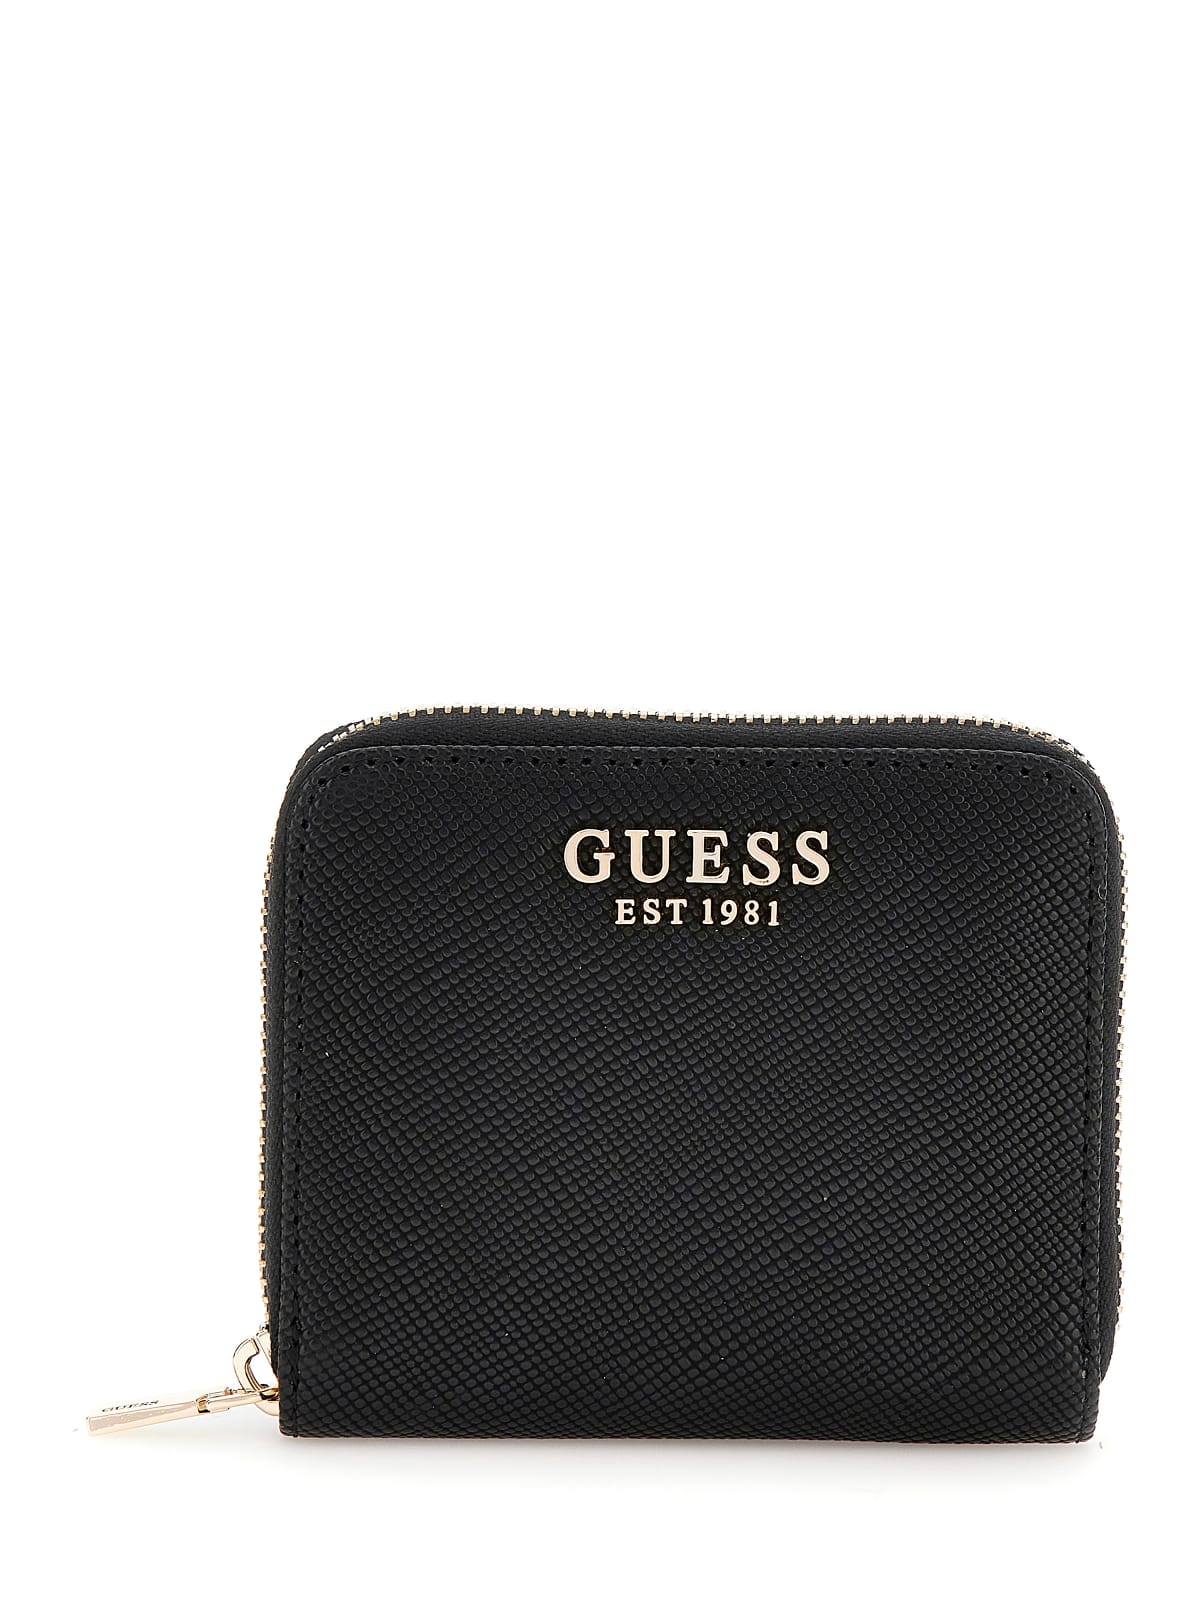 Guess Turin Crossbody Bag Handbag Mini Triple Zip Vegan Leather Small Purse  - Guess bag - 190231534945 | Fash Brands